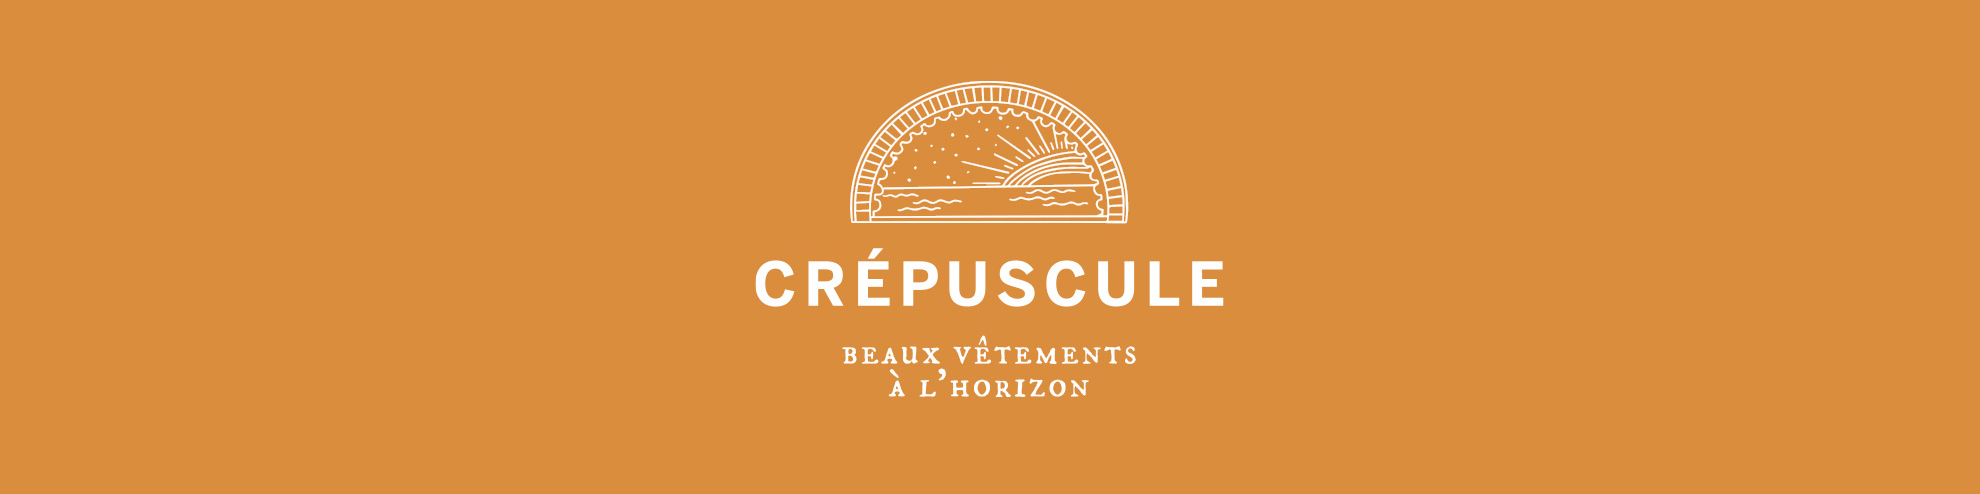 CREPUSCULE_INTRO2